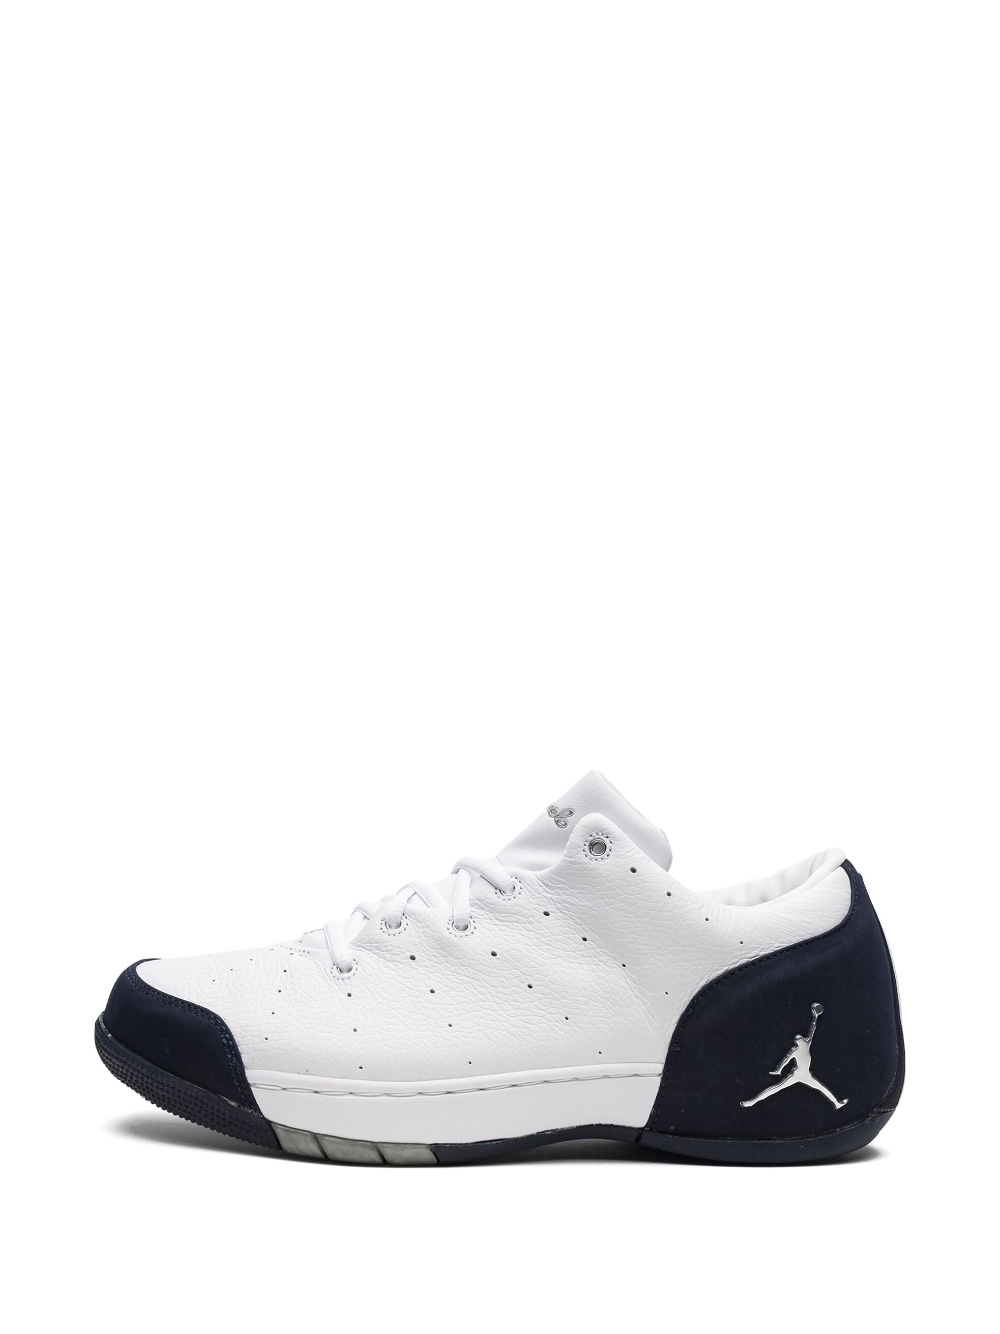 Jordan Carmelo 1.5 Low "White/Metallic Silver/Obsidian" sneakers - 5